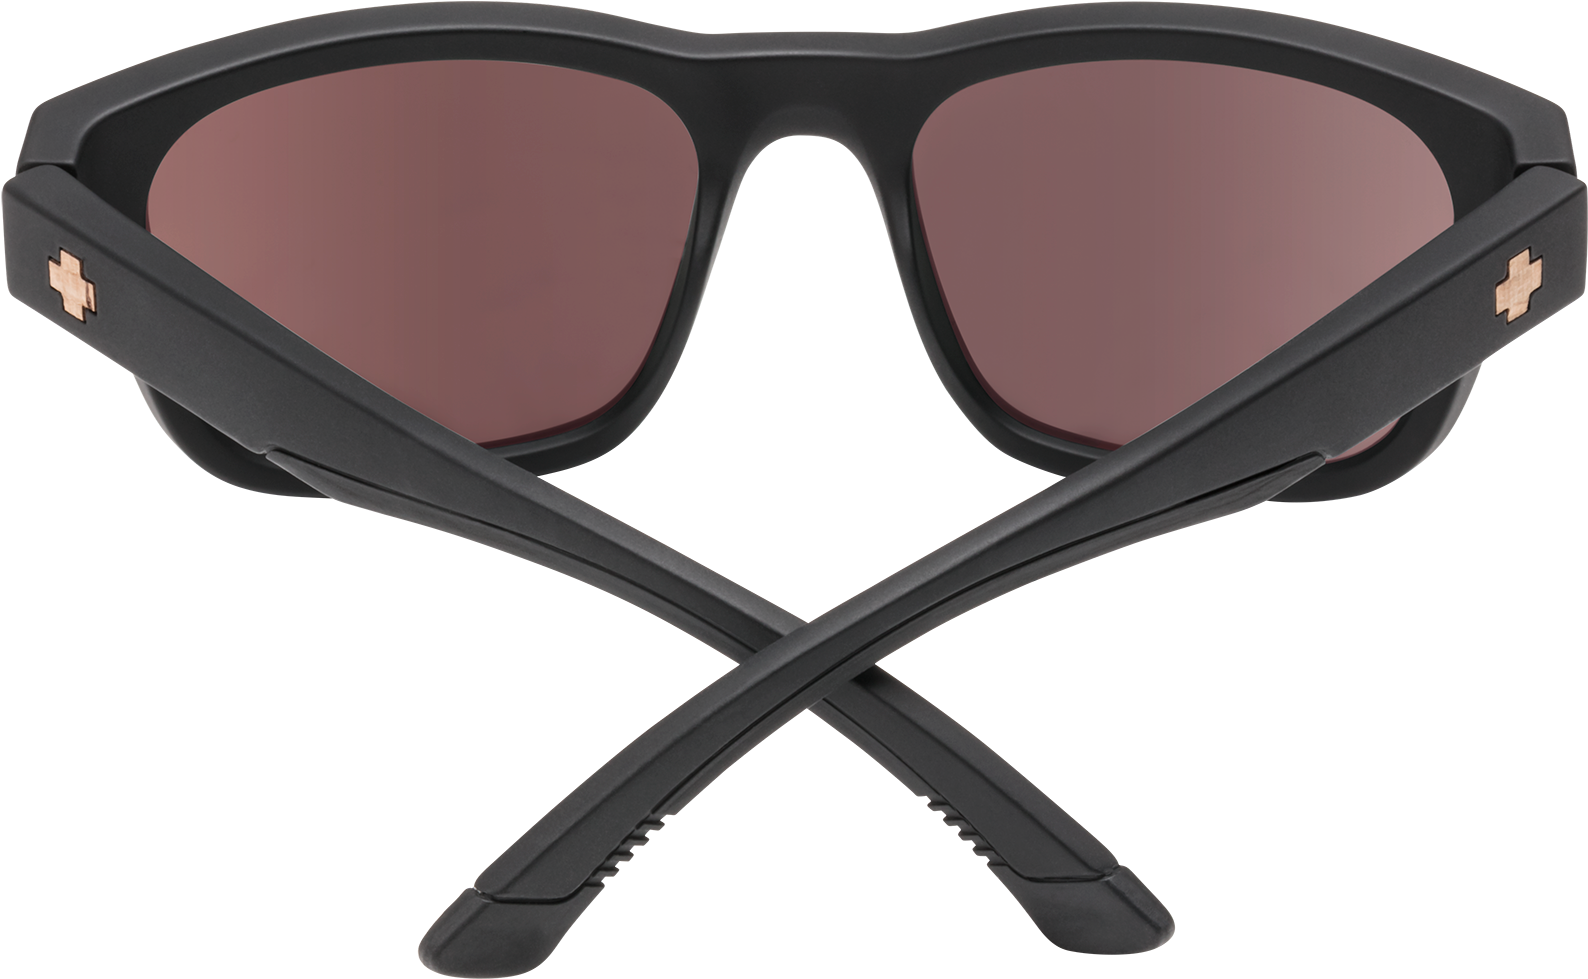 Iconic Black Sunglasses Crossed PNG image